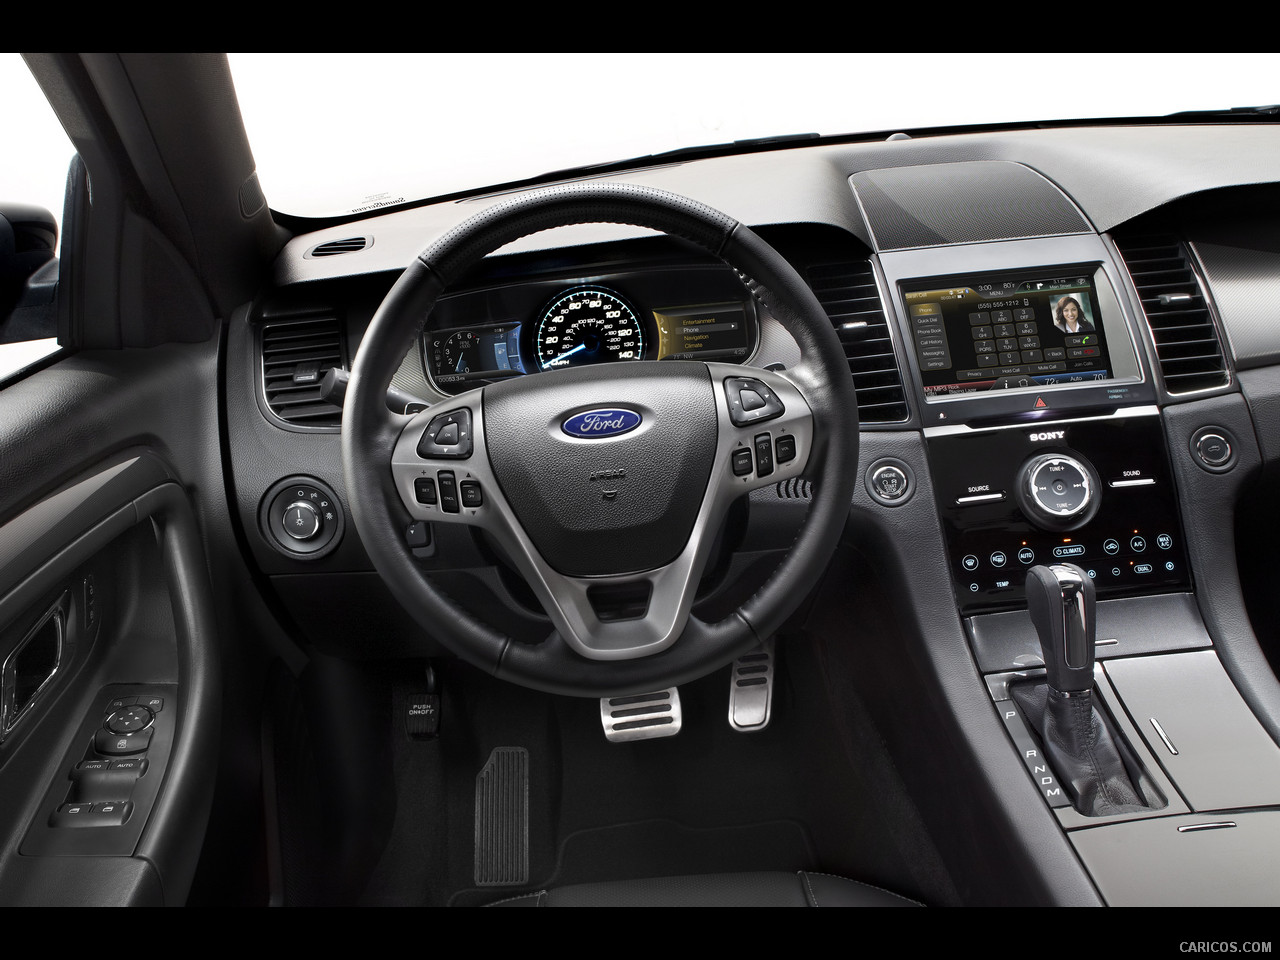 Ford Taurus 2013 Interior Images &amp; Pictures - Becuo